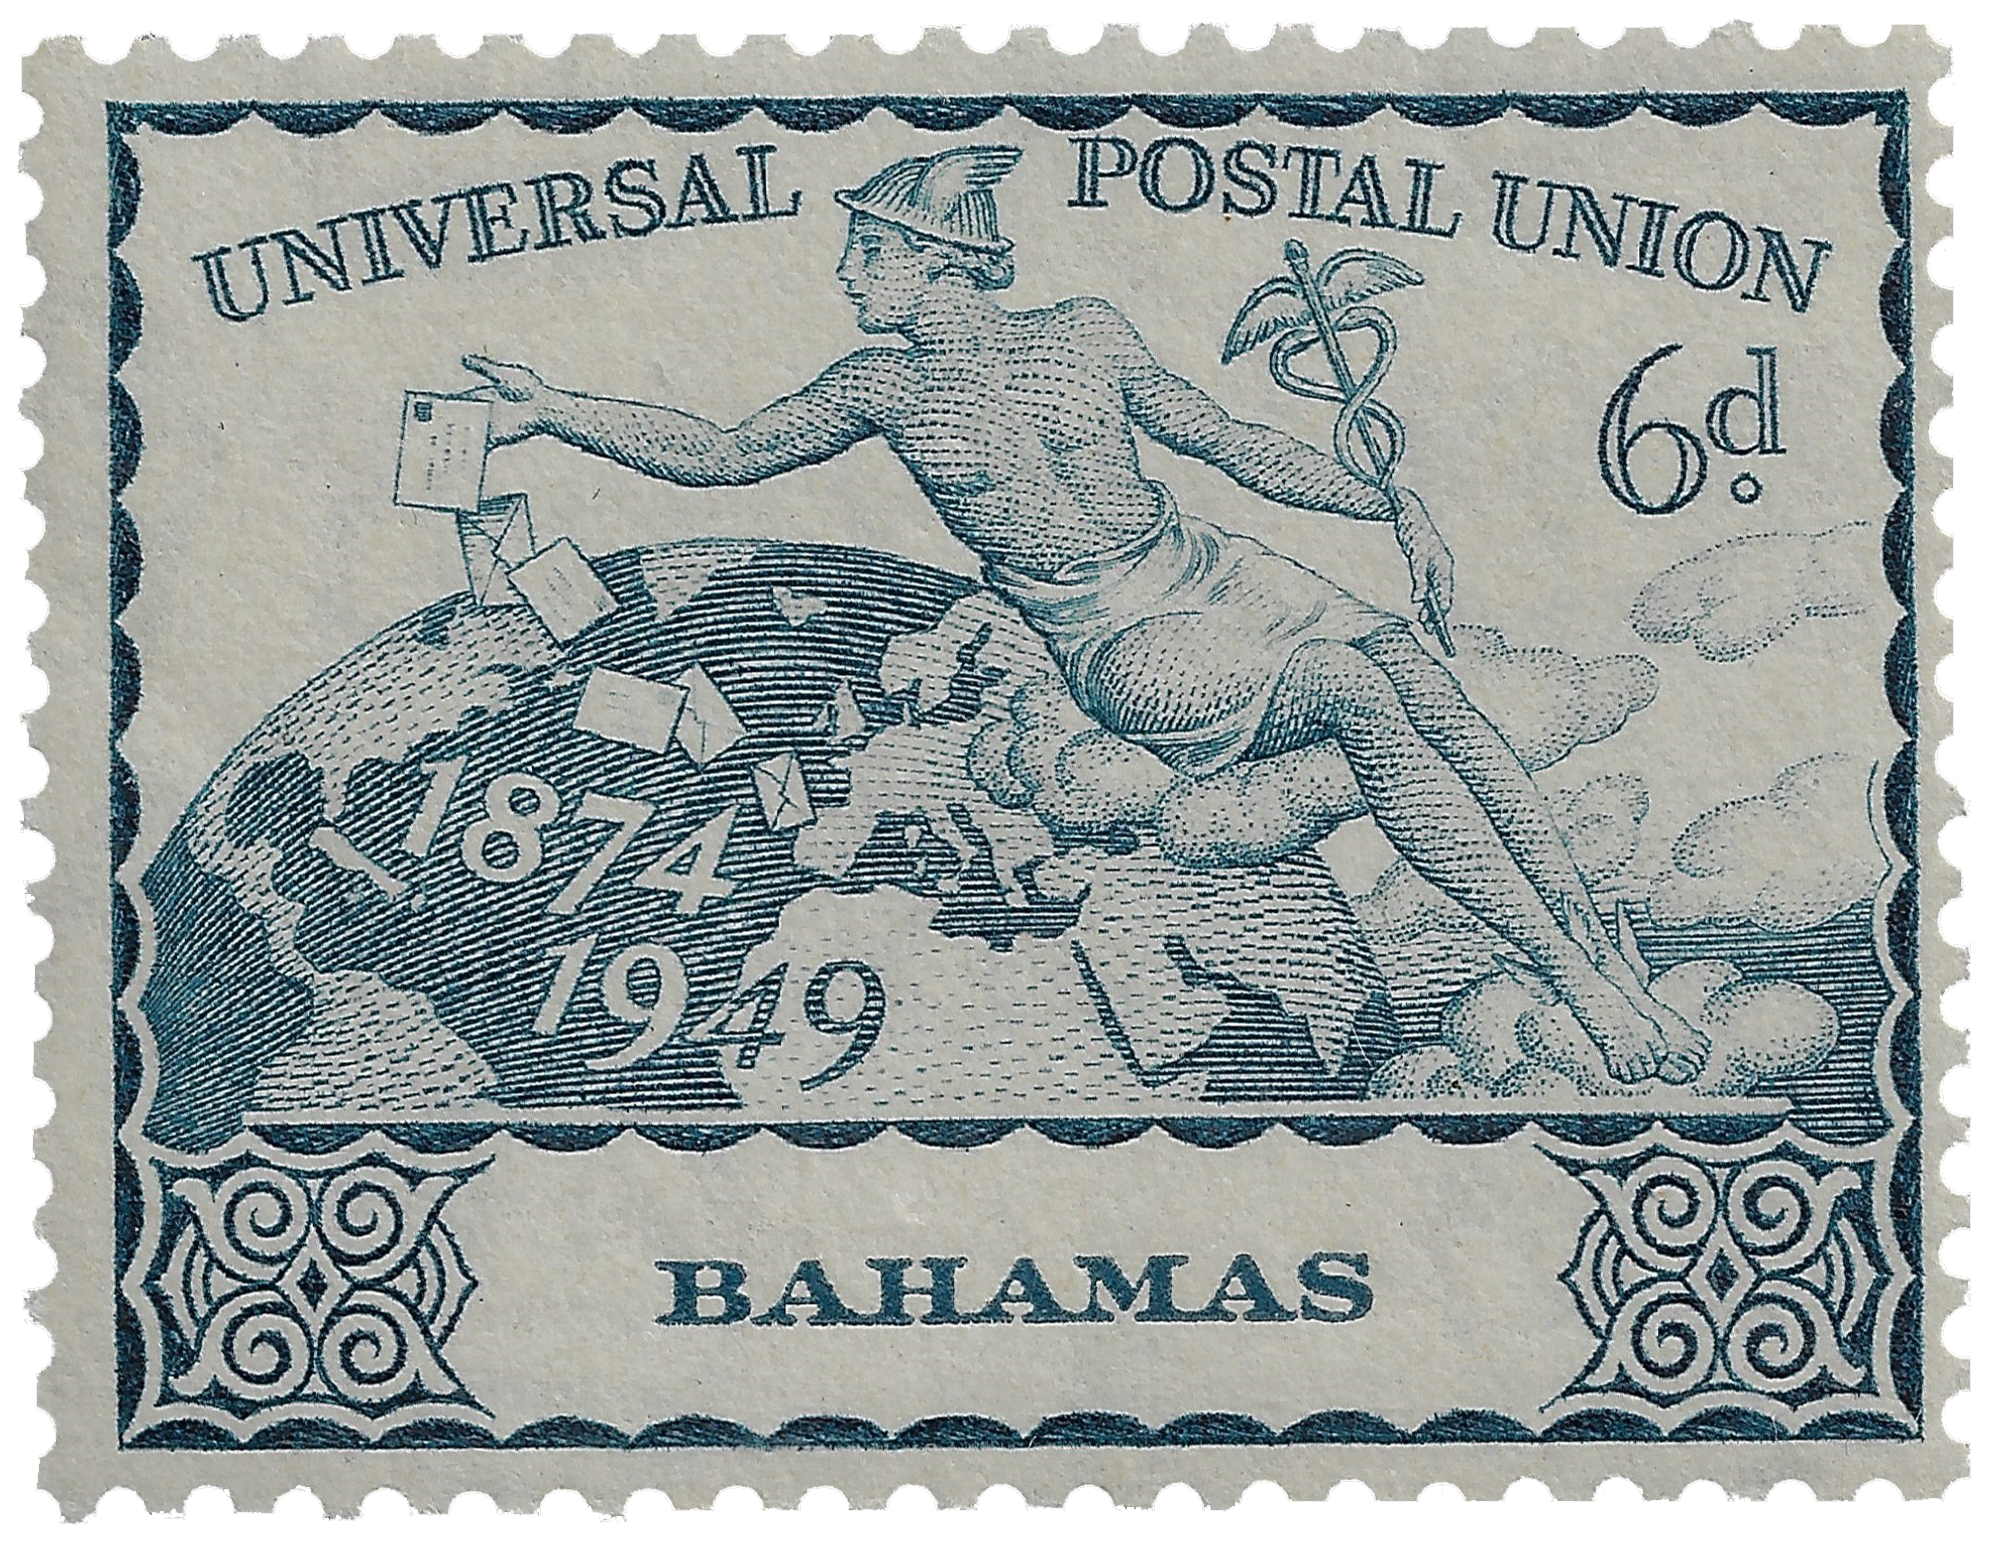 6d 1949, Universal Posta Union 1874-1949